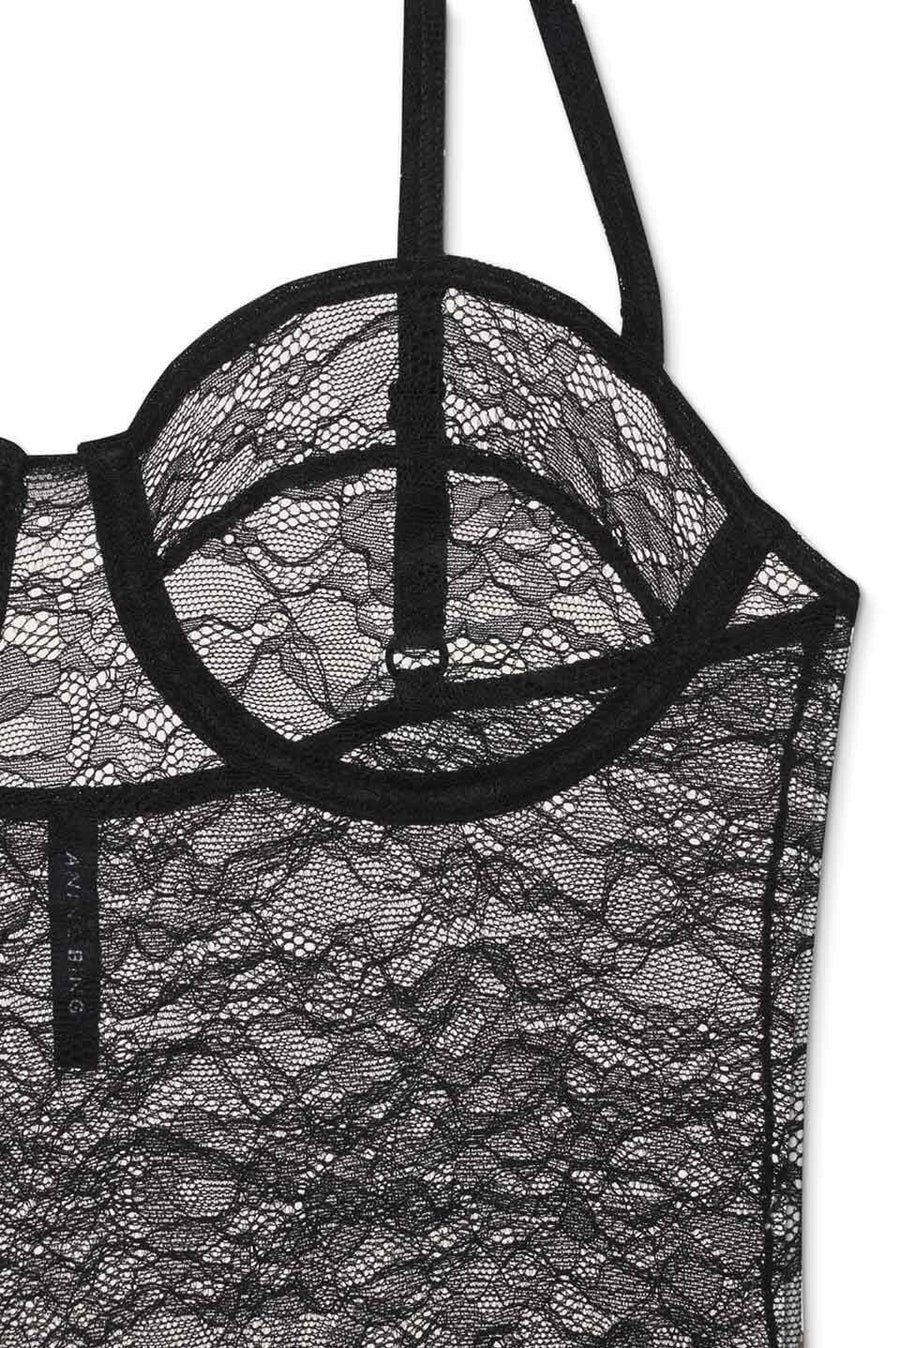 anine bing via bodysuit black lace detail